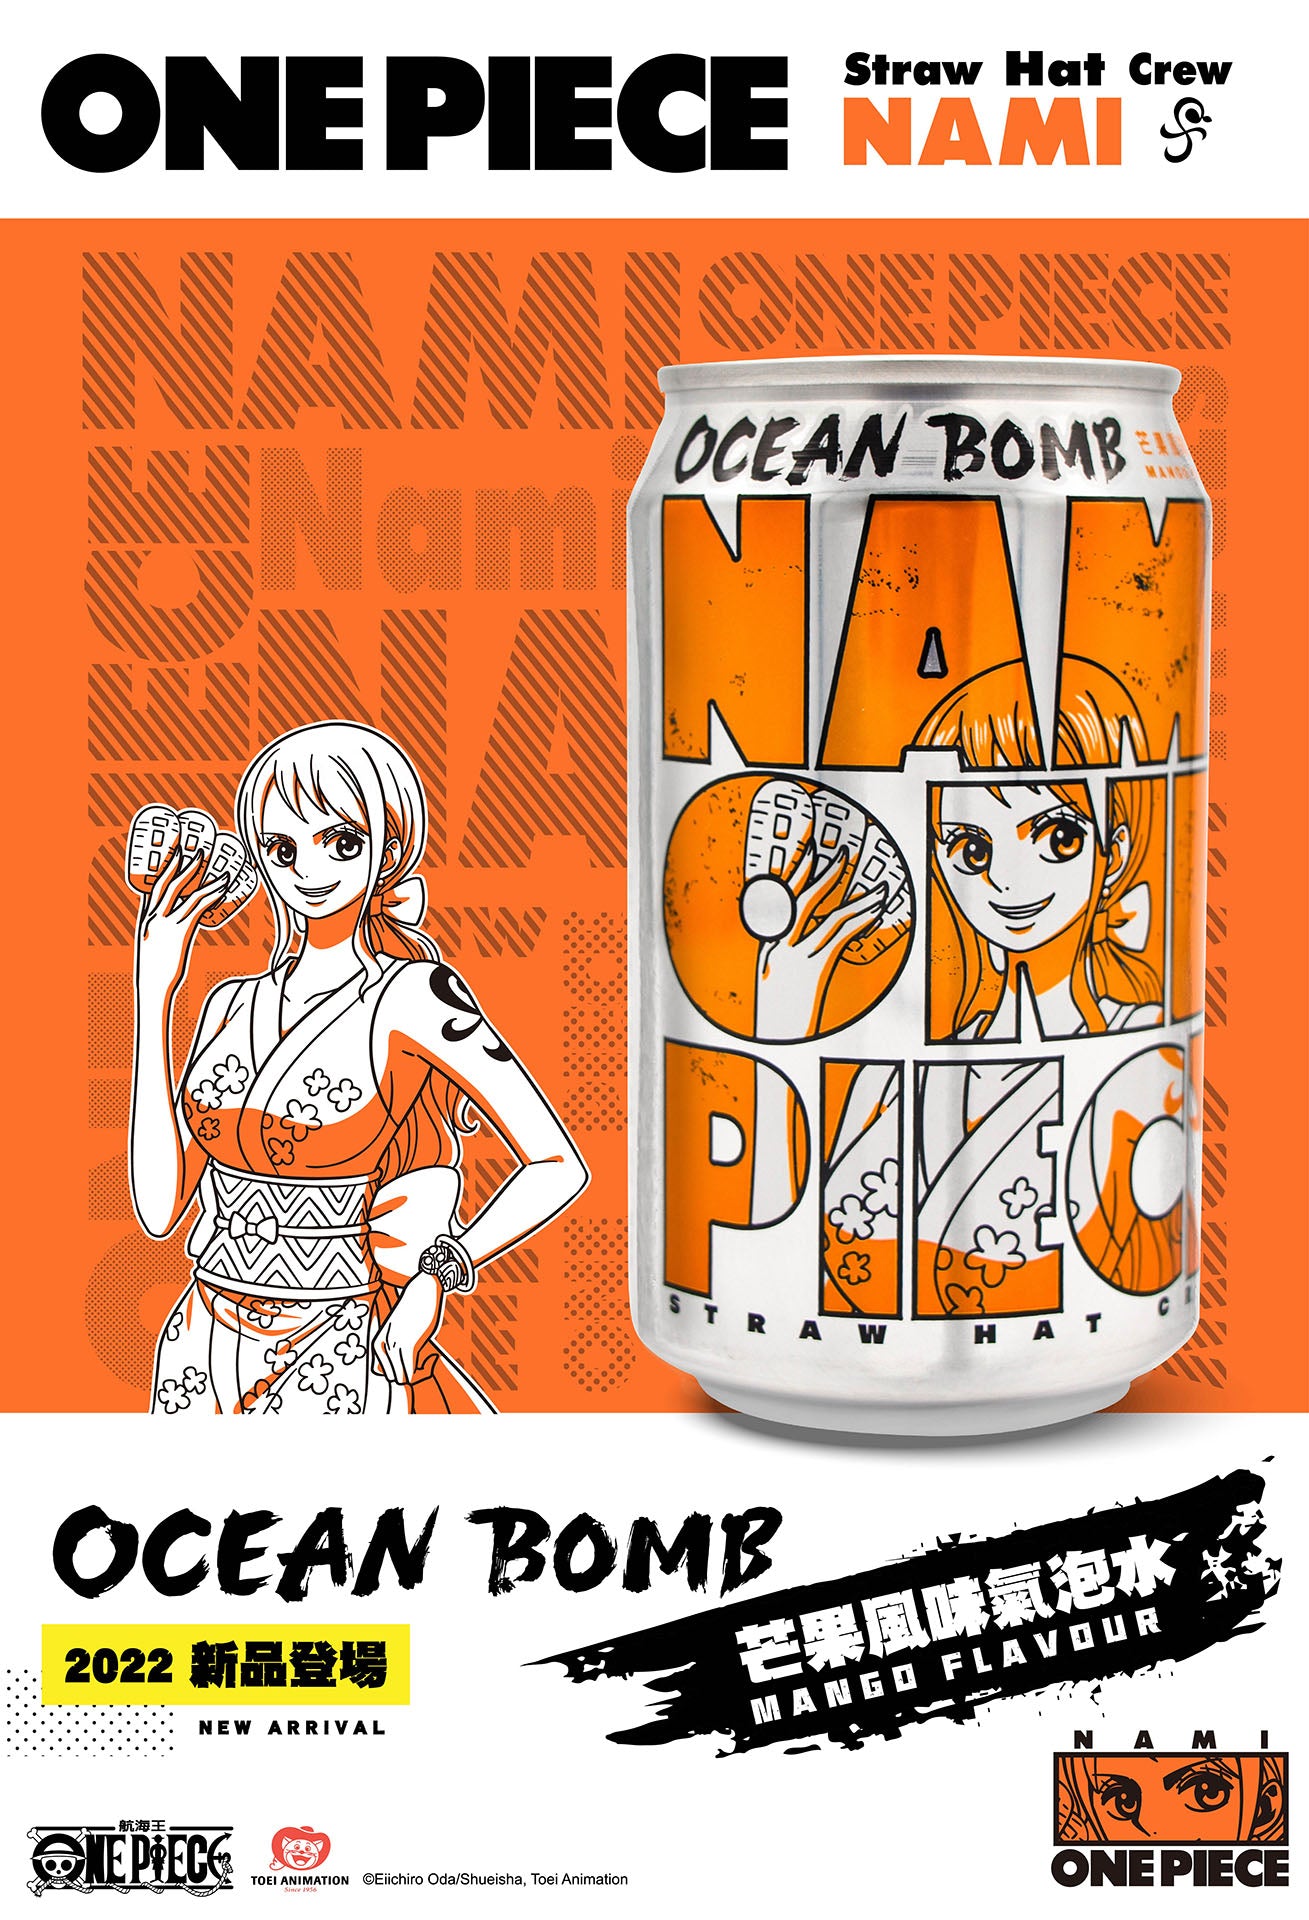 Sparkling Water Mango Flavor - Ocean Bomb